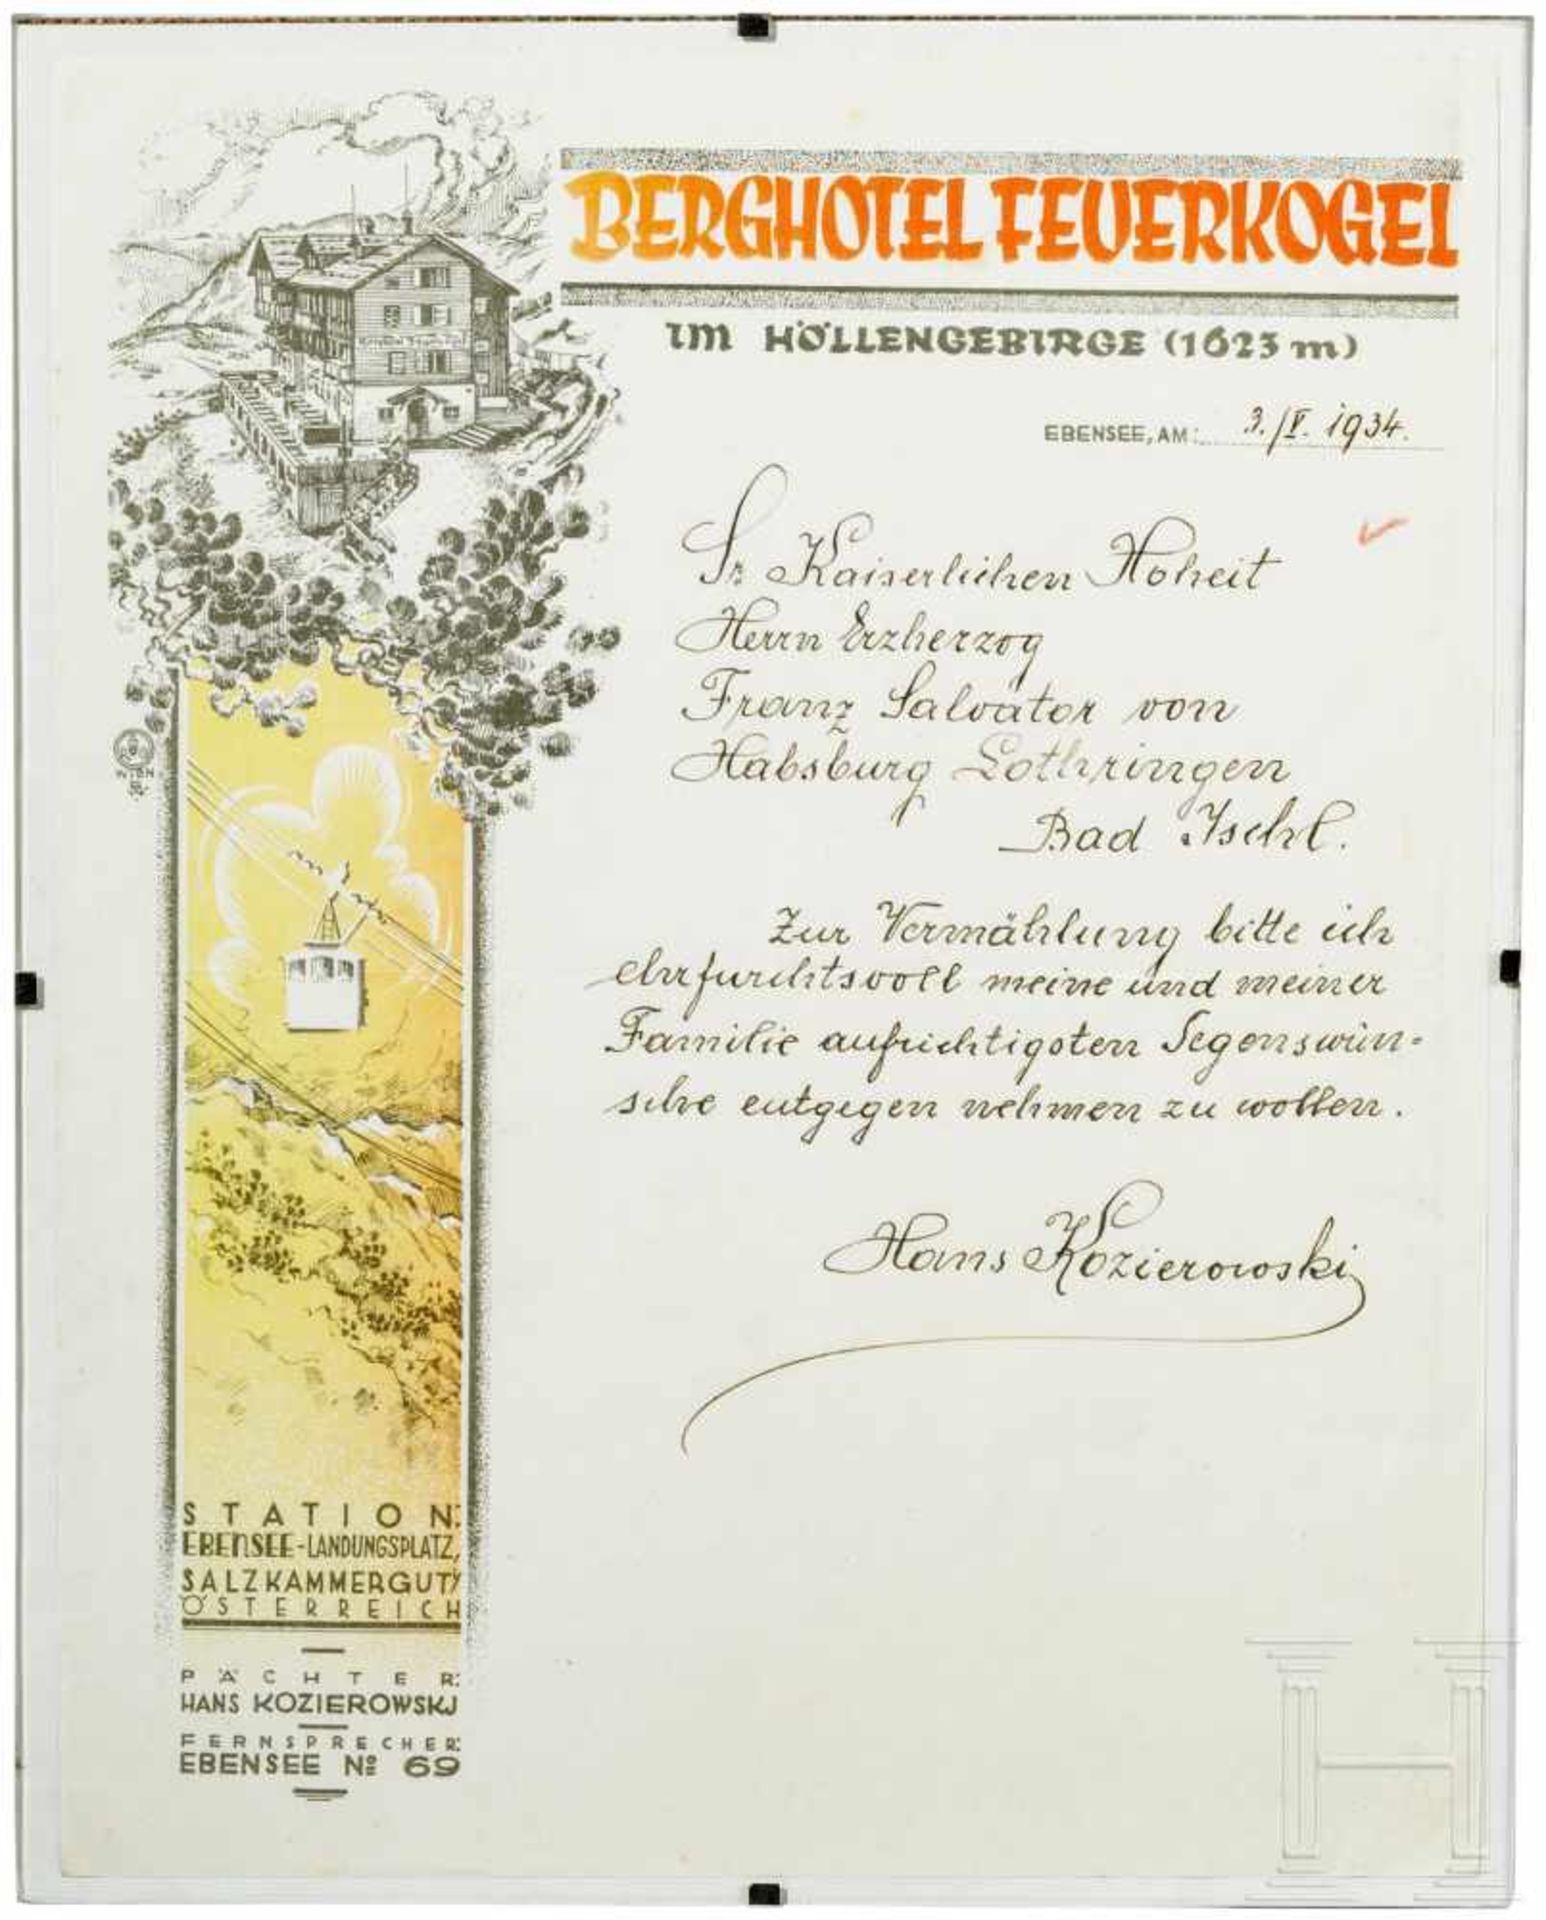 Archduke Franz Salvator of Austria-Tuscany - letter of congratulations on his wedding to Melanie von